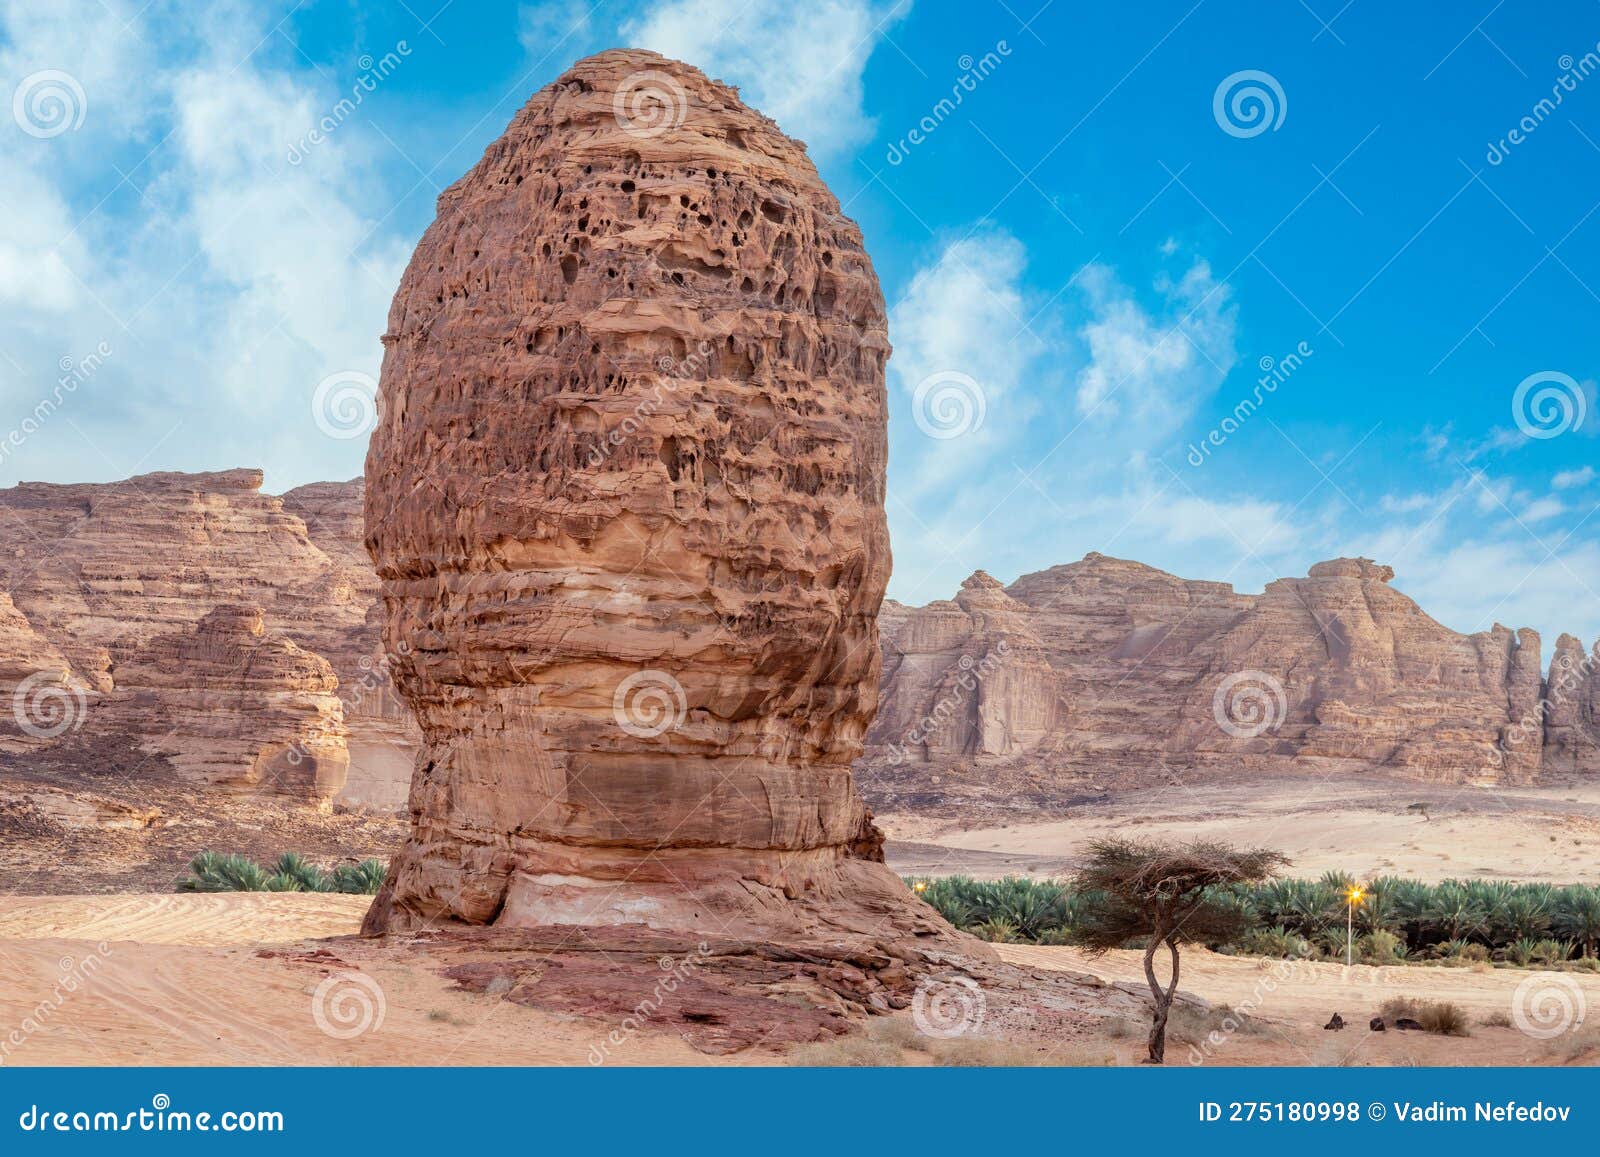 desert erosion formations near al ula, saudi arabia